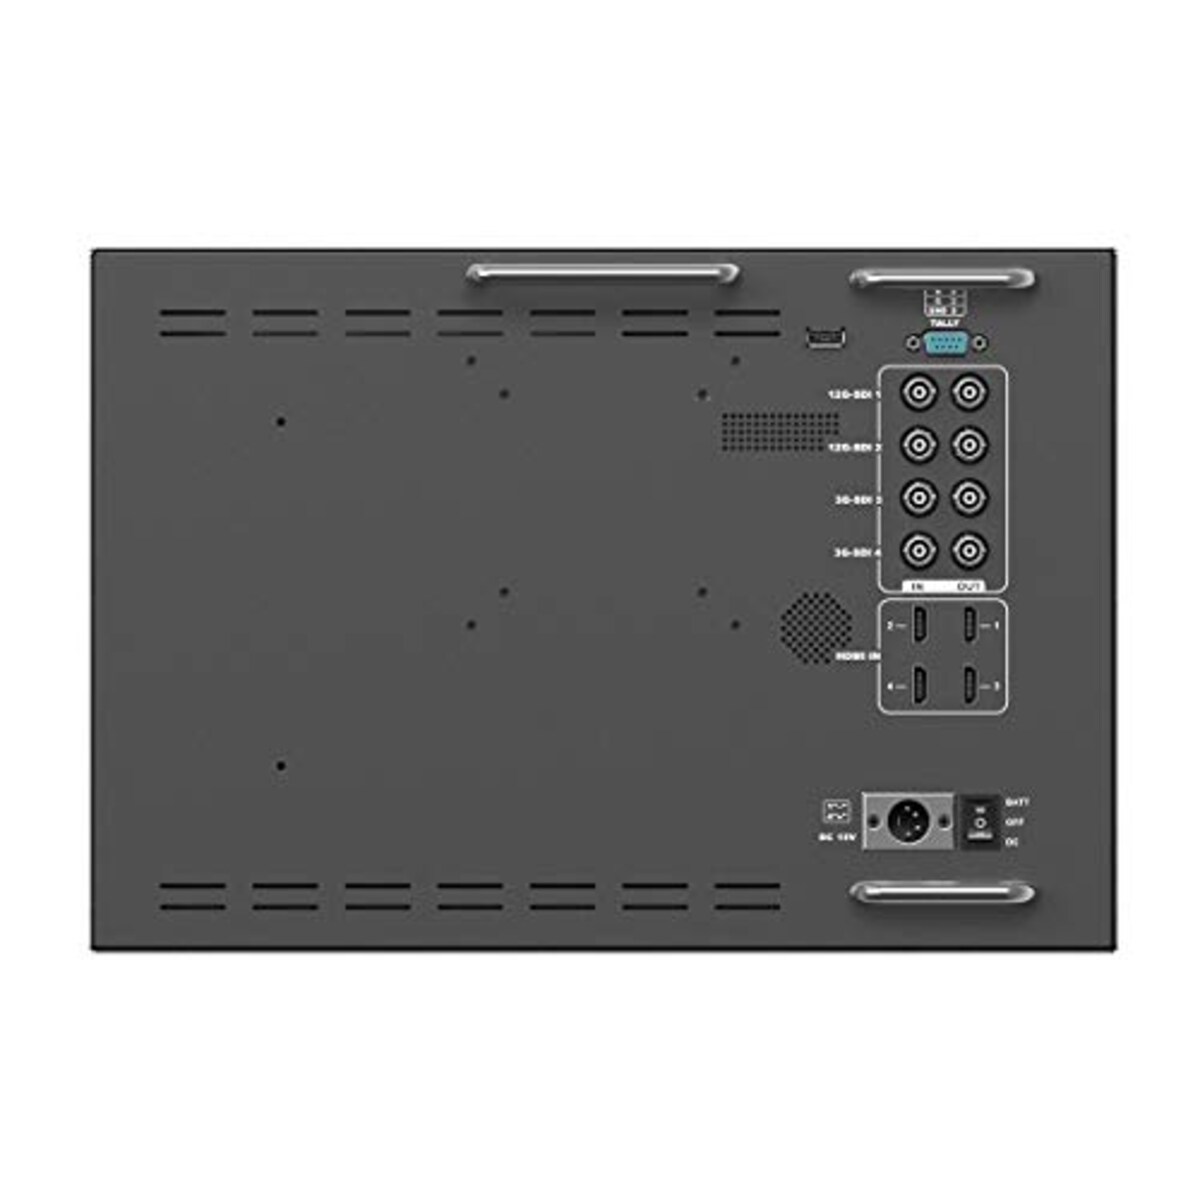  Lilliput BM150-12G 15.6インチ 12G-SDI モニター ブラック画像2 